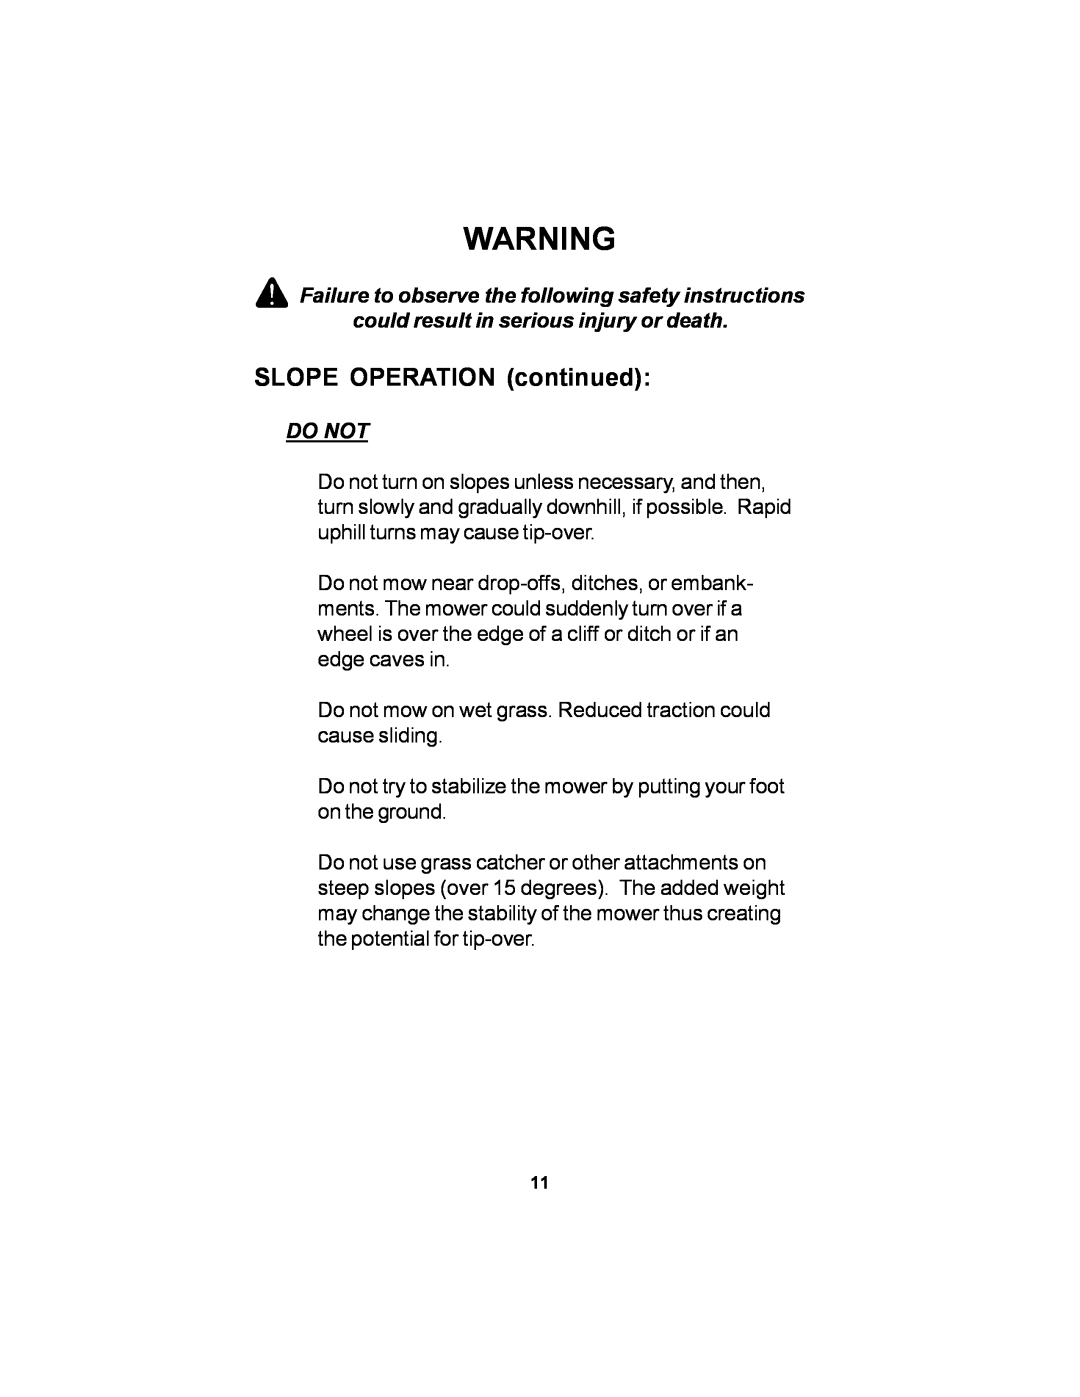 Dixon ELS 60 manual SLOPE OPERATION continued, Do Not 